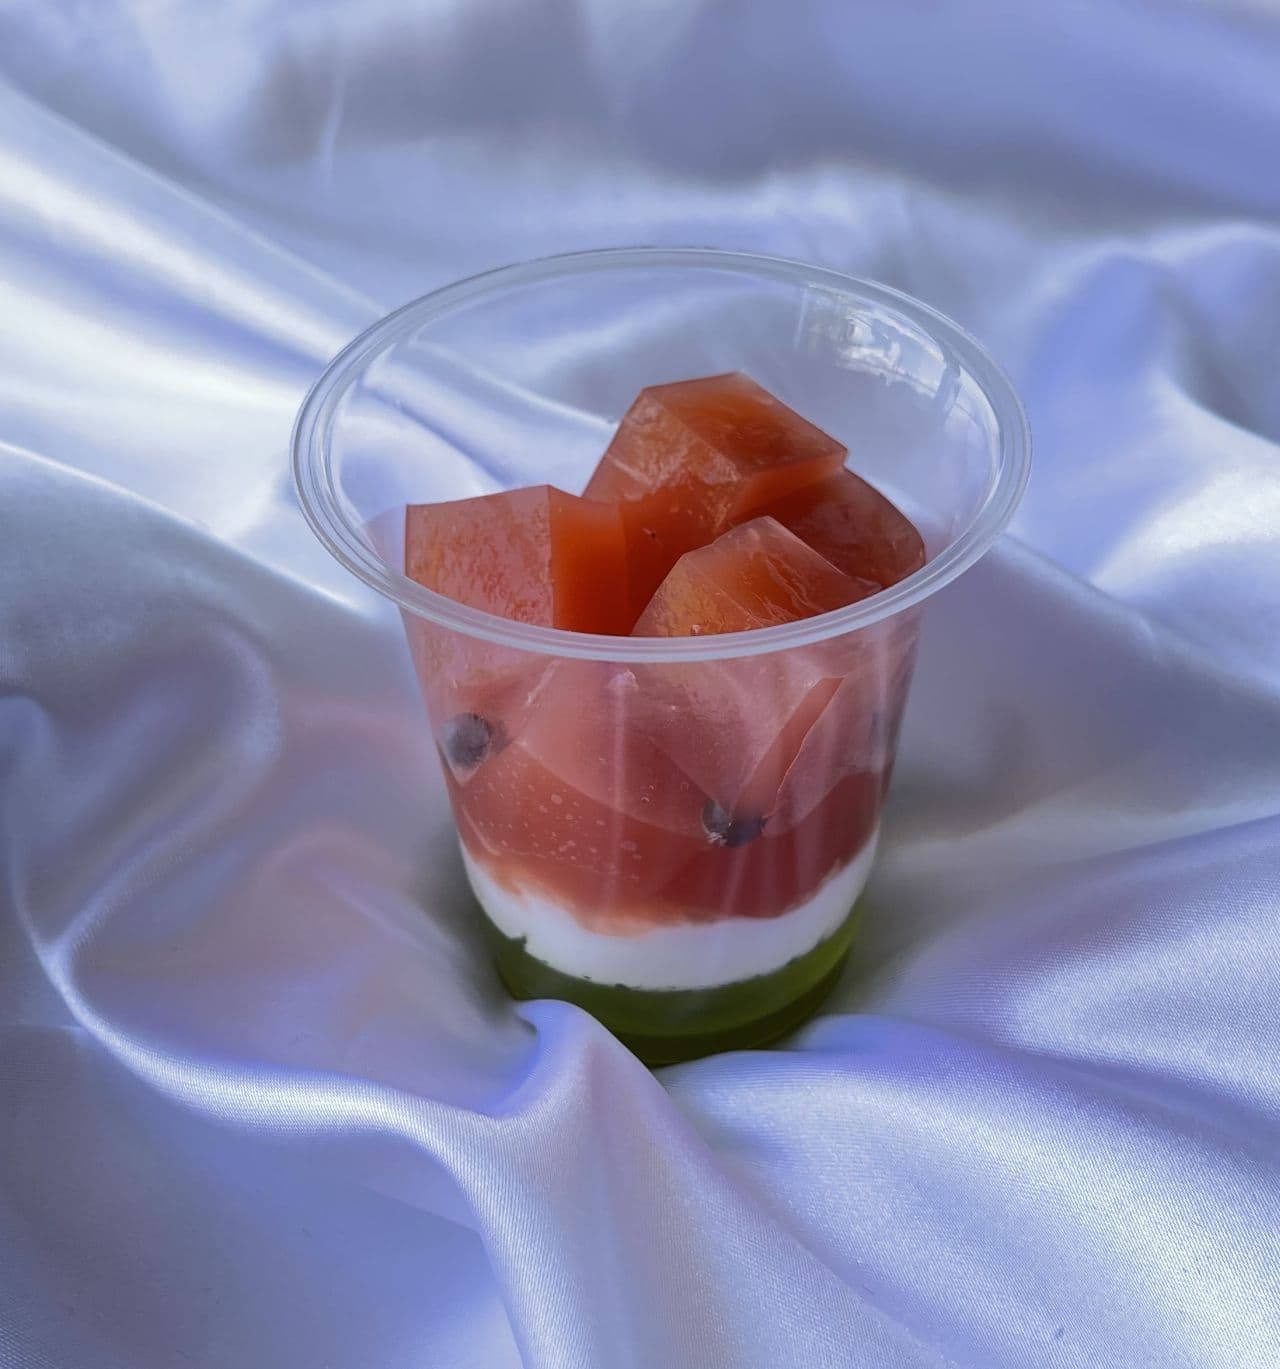 Aeon "Jelly that looks like watermelon